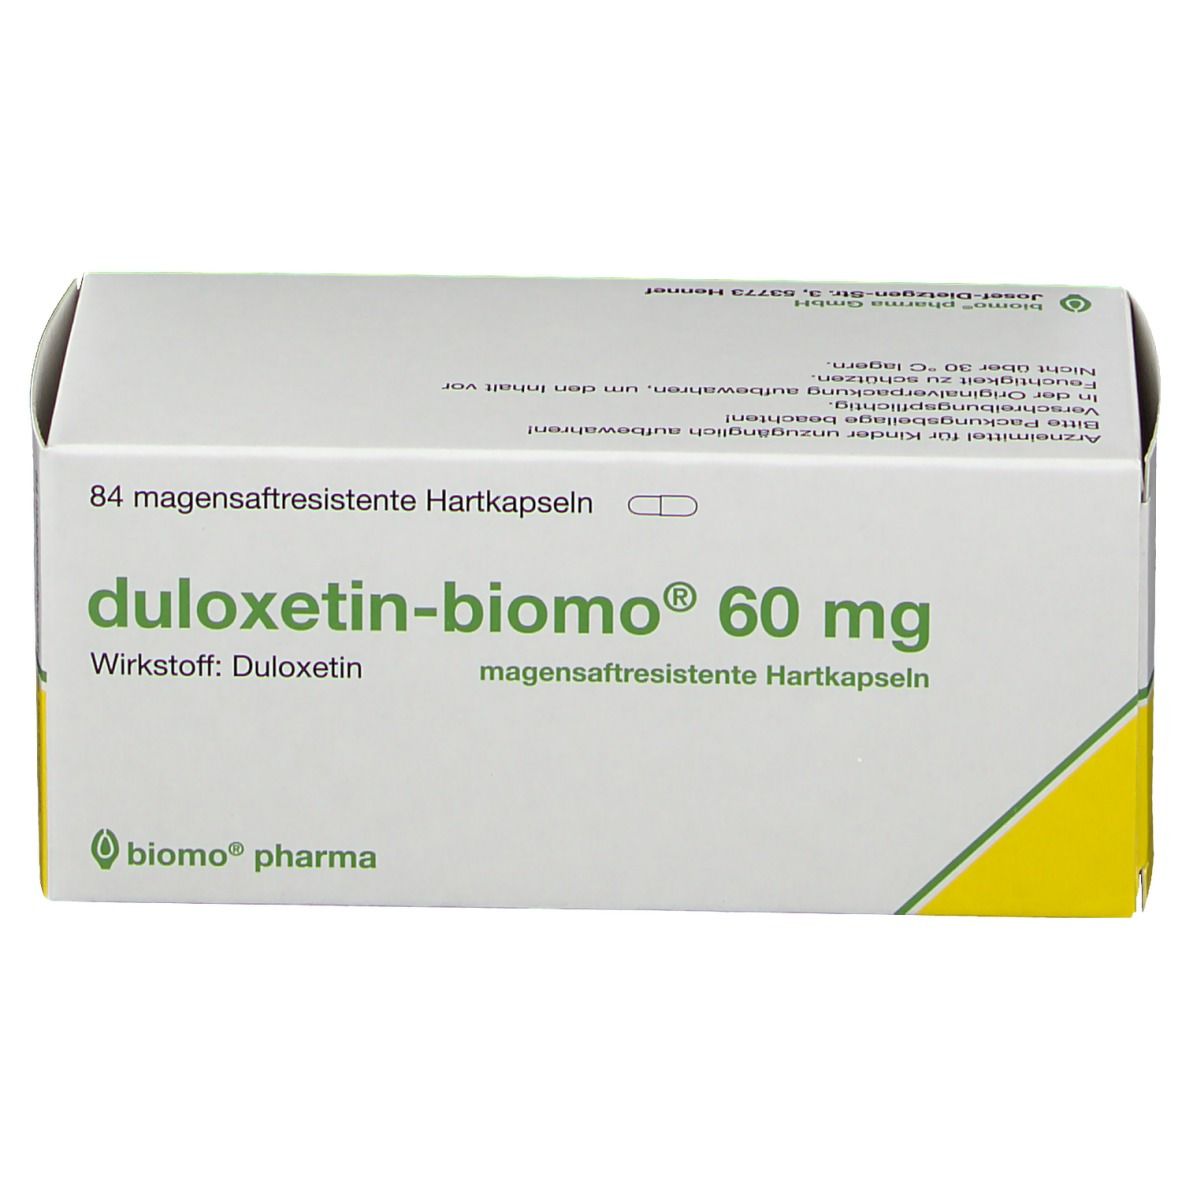 duloxetin-biomo 60 mg